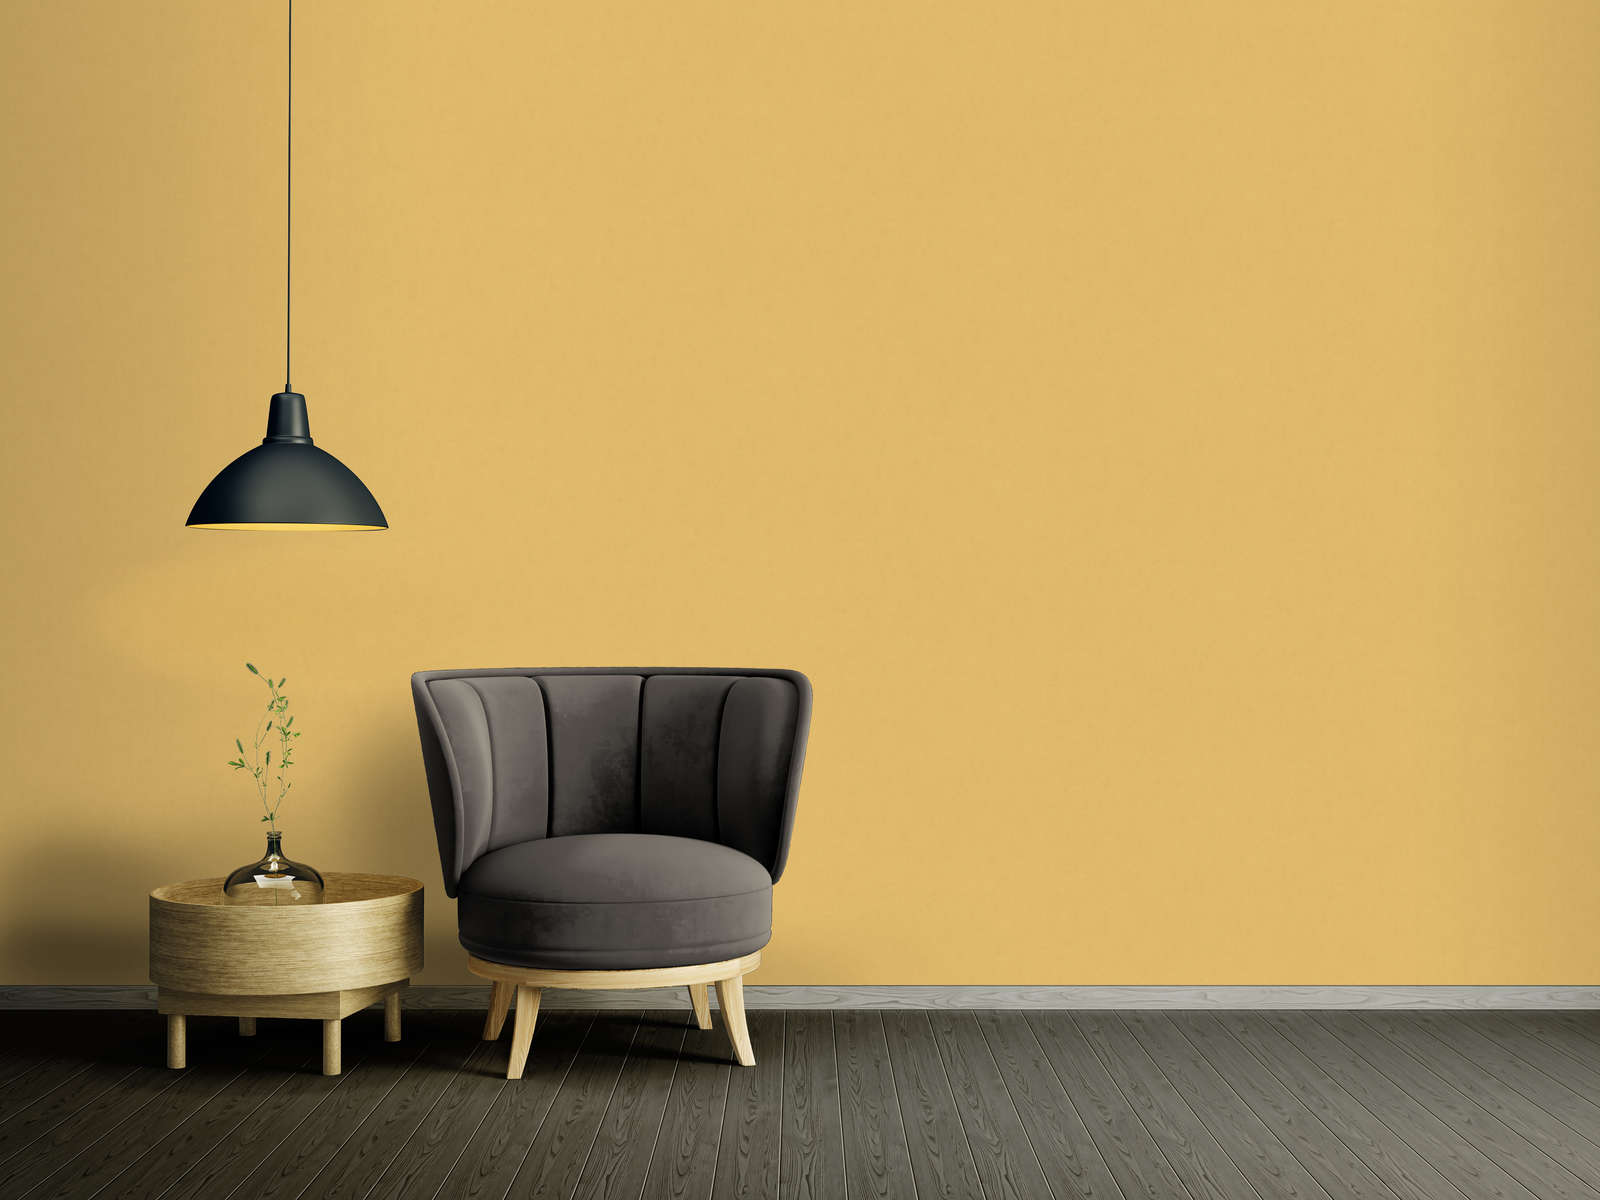             Plain wallpaper in plaster look - yellow
        